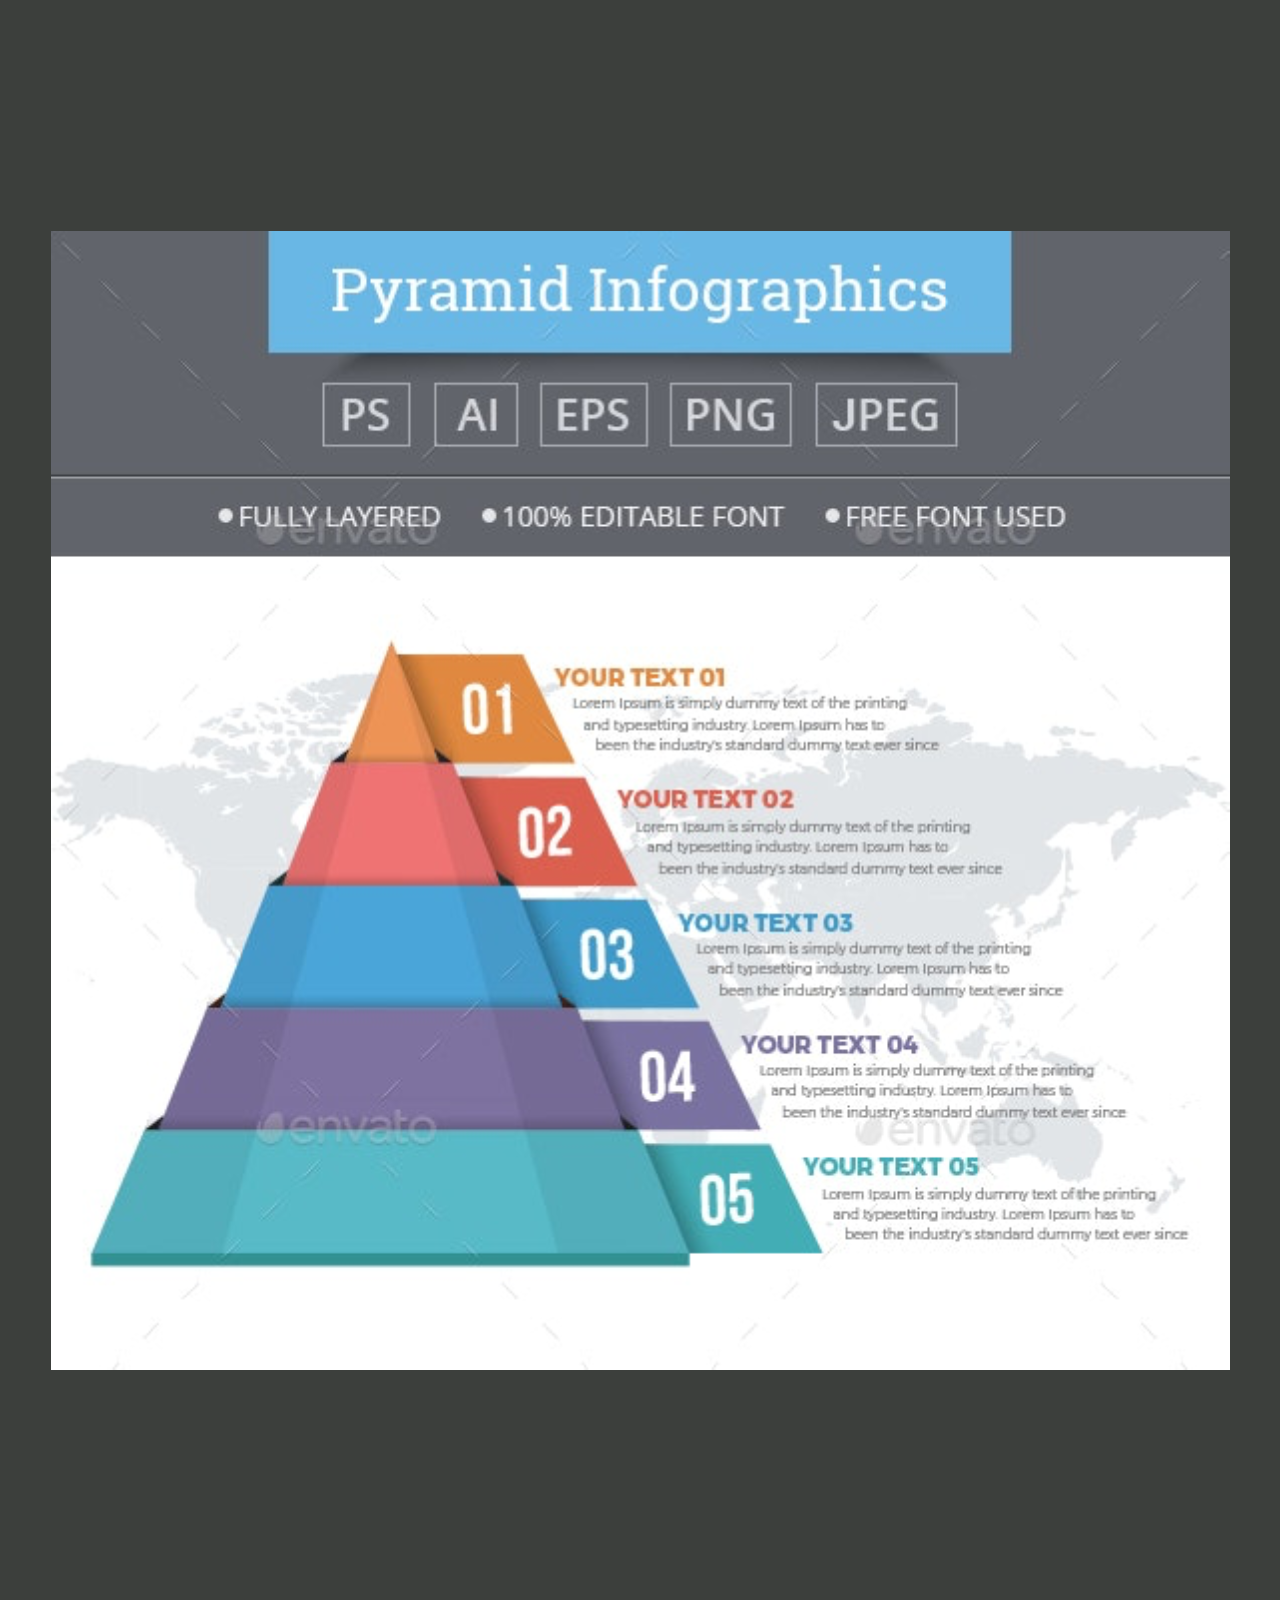 Pyramid infographics pinterest image.